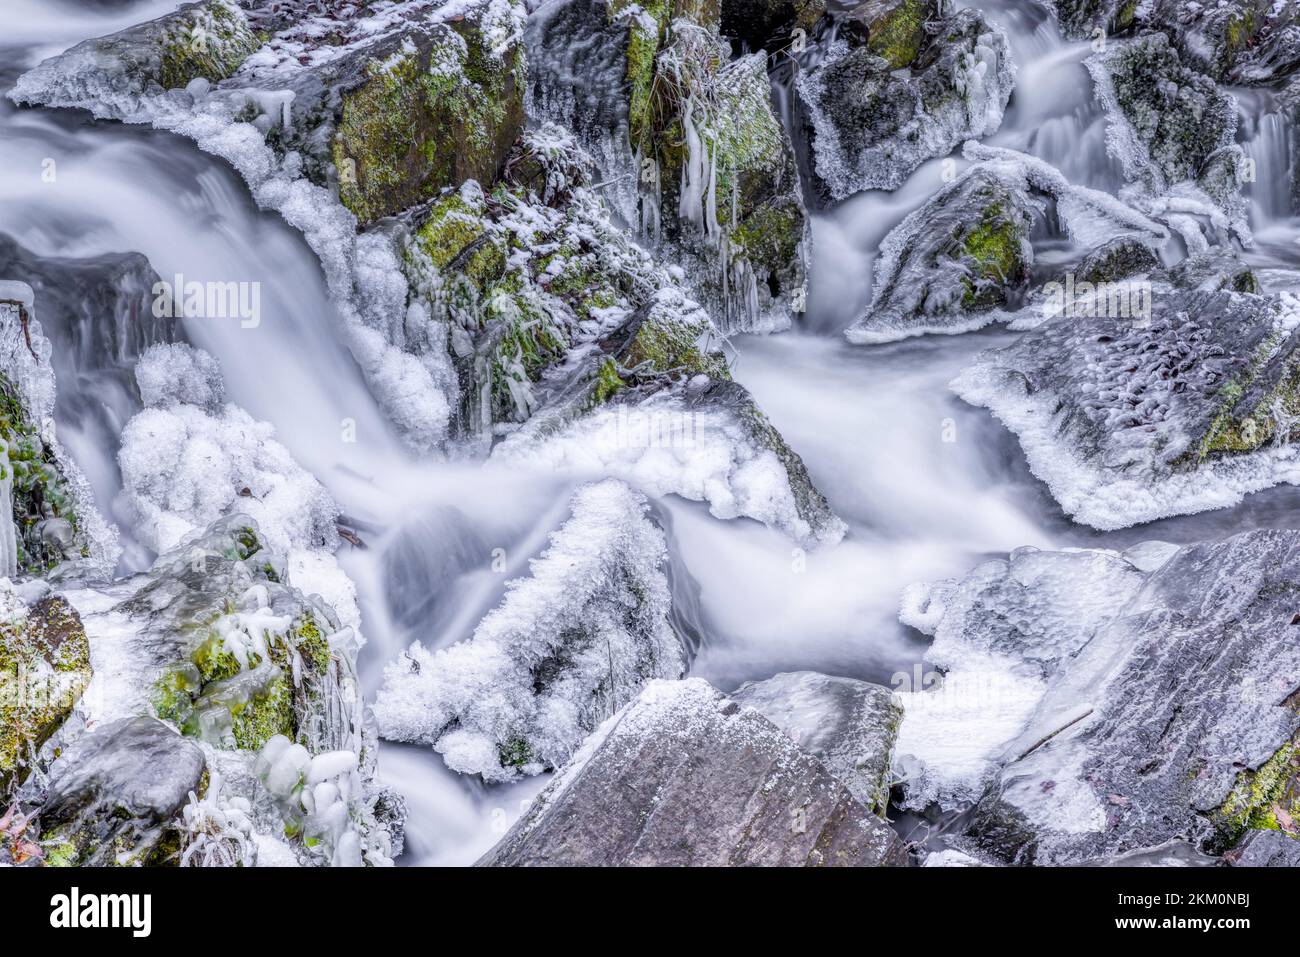 Selkewasserfall im Selketal Harz Stock Photo